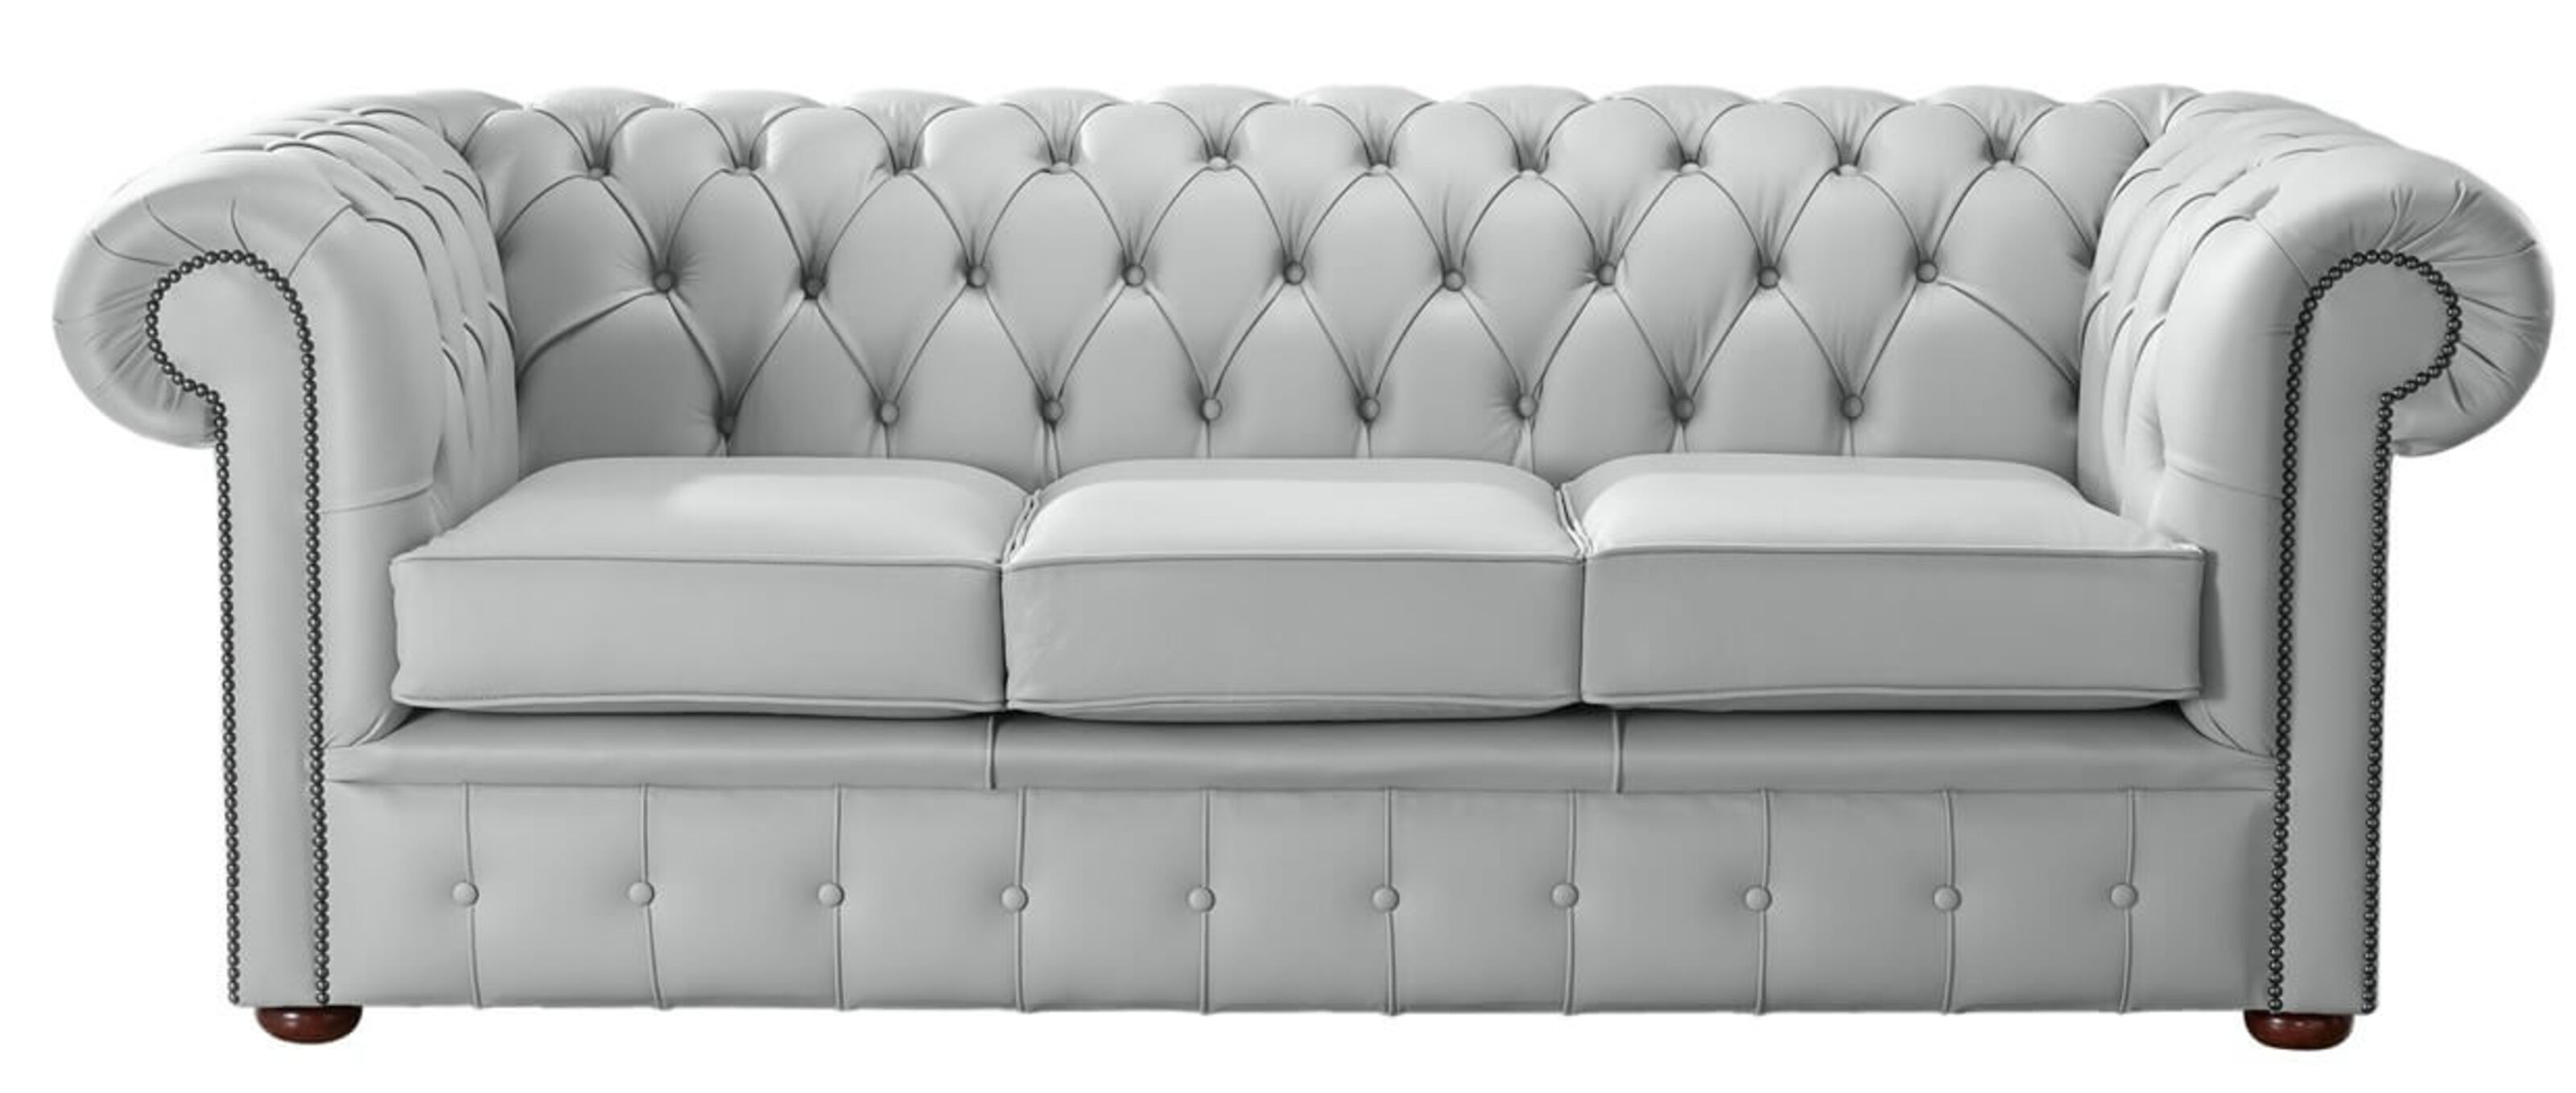 metallic grey leather sofa